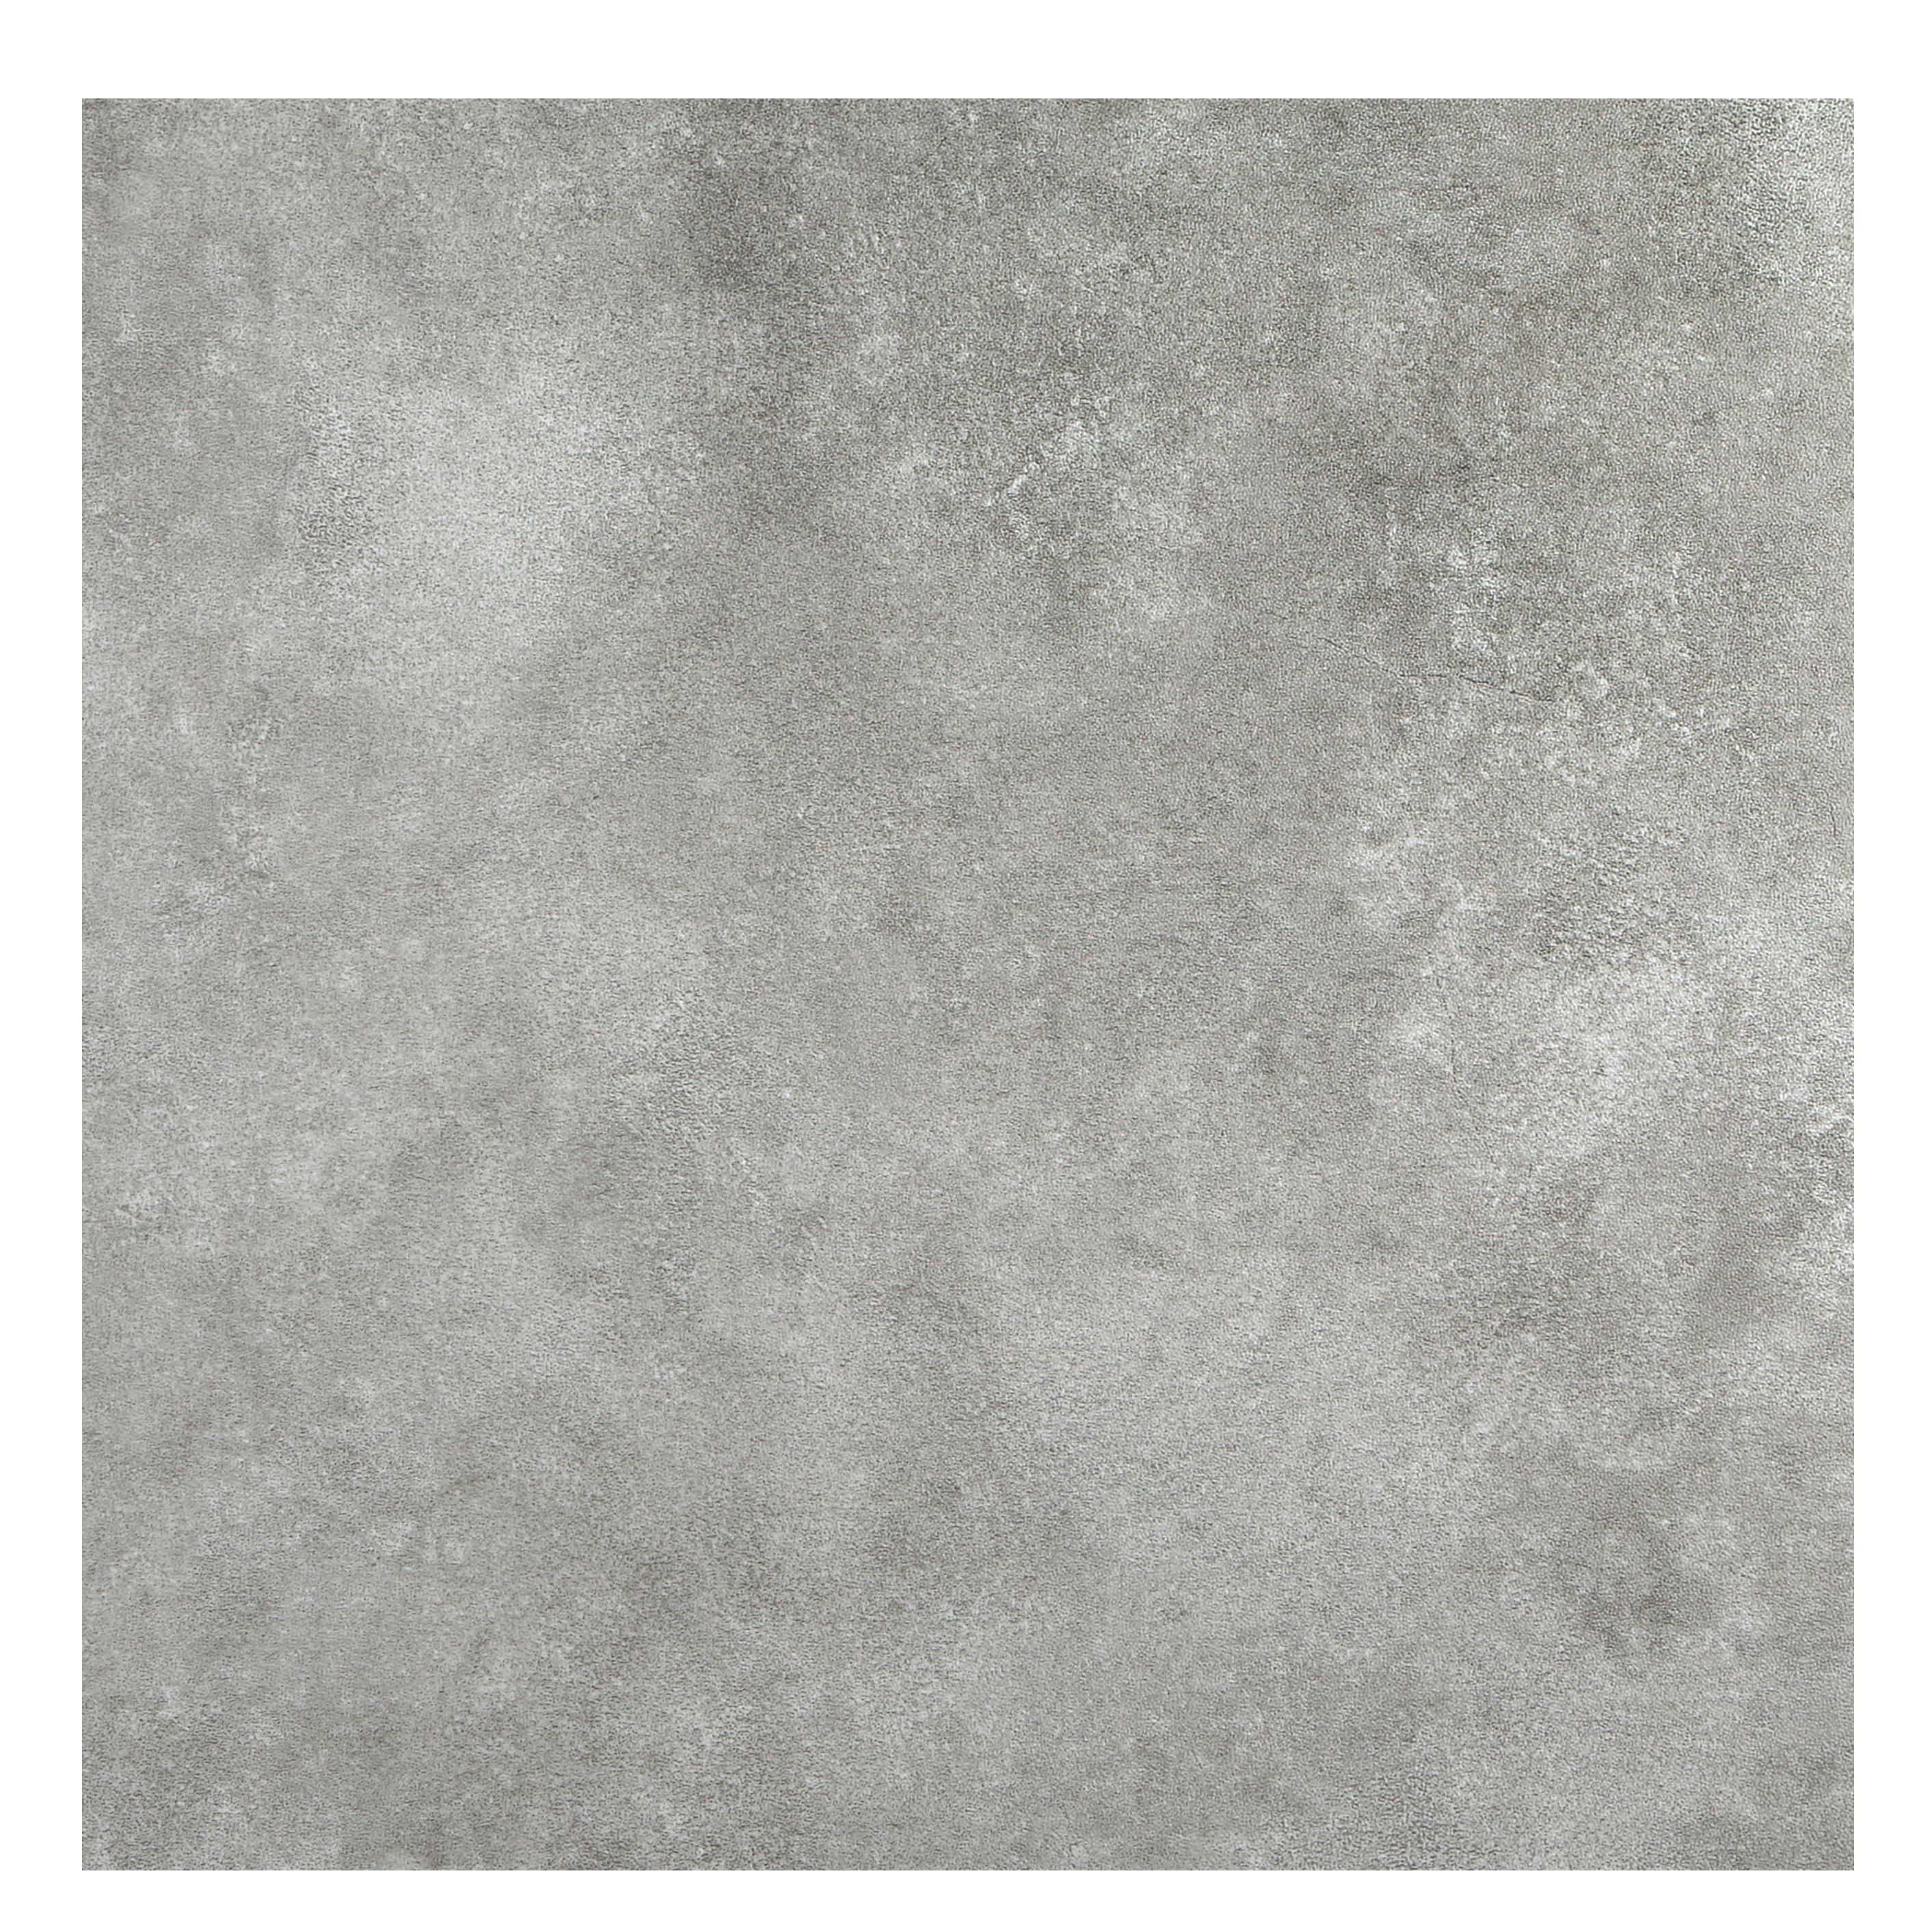 Colours Grey Stone effect Self adhesive Vinyl tile 1 02m 